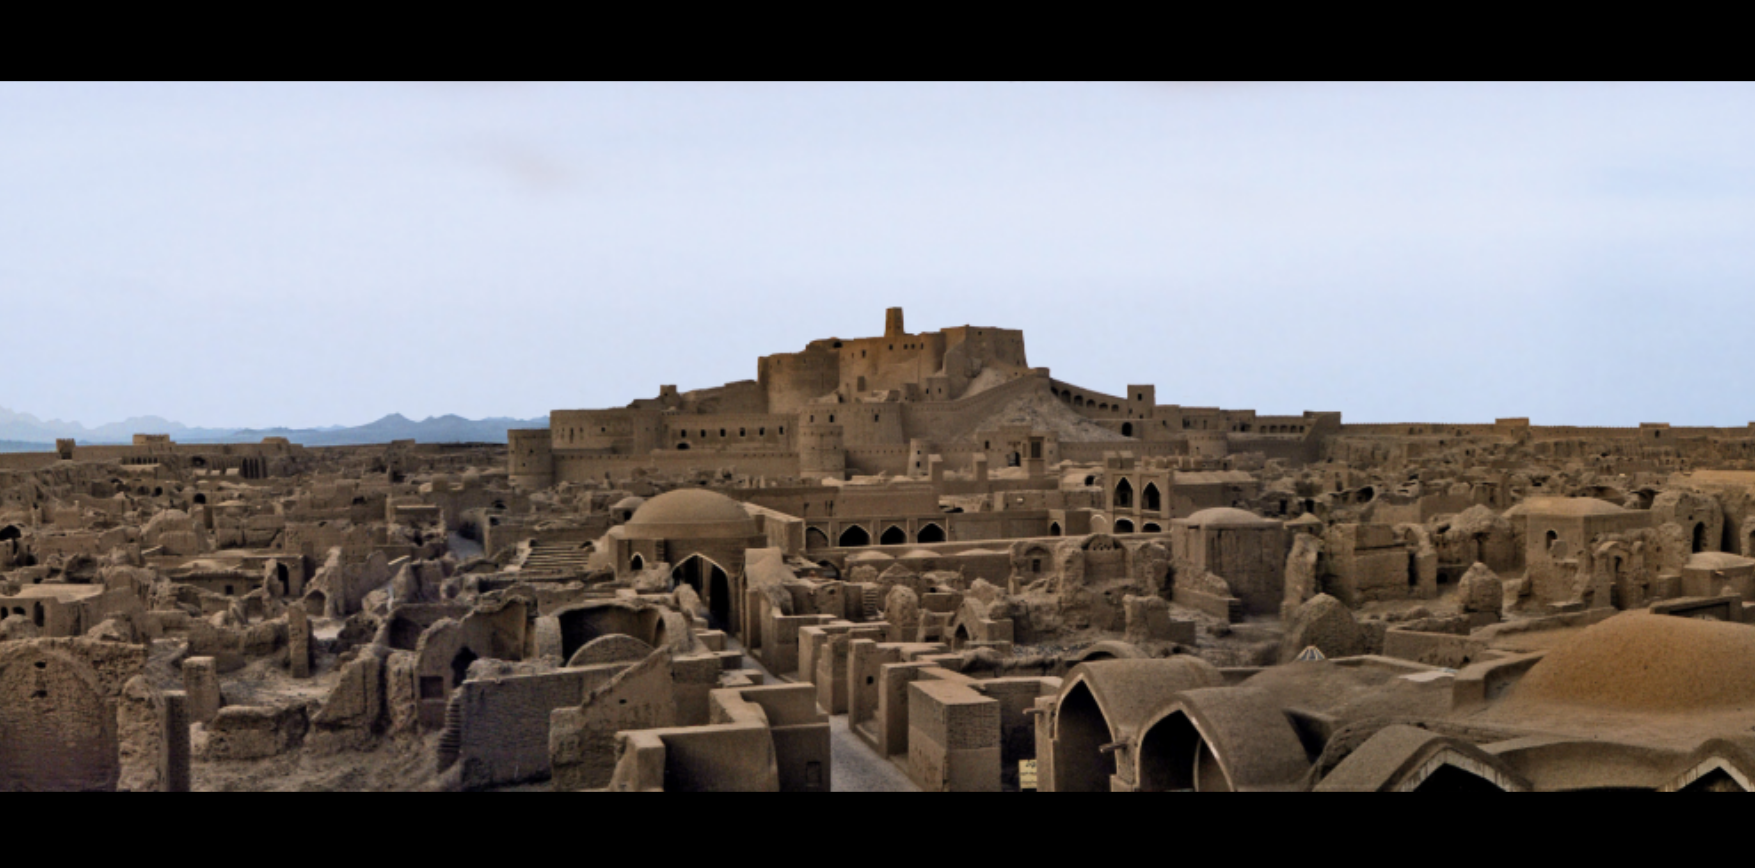 Ancient Bam Citadel in Iran